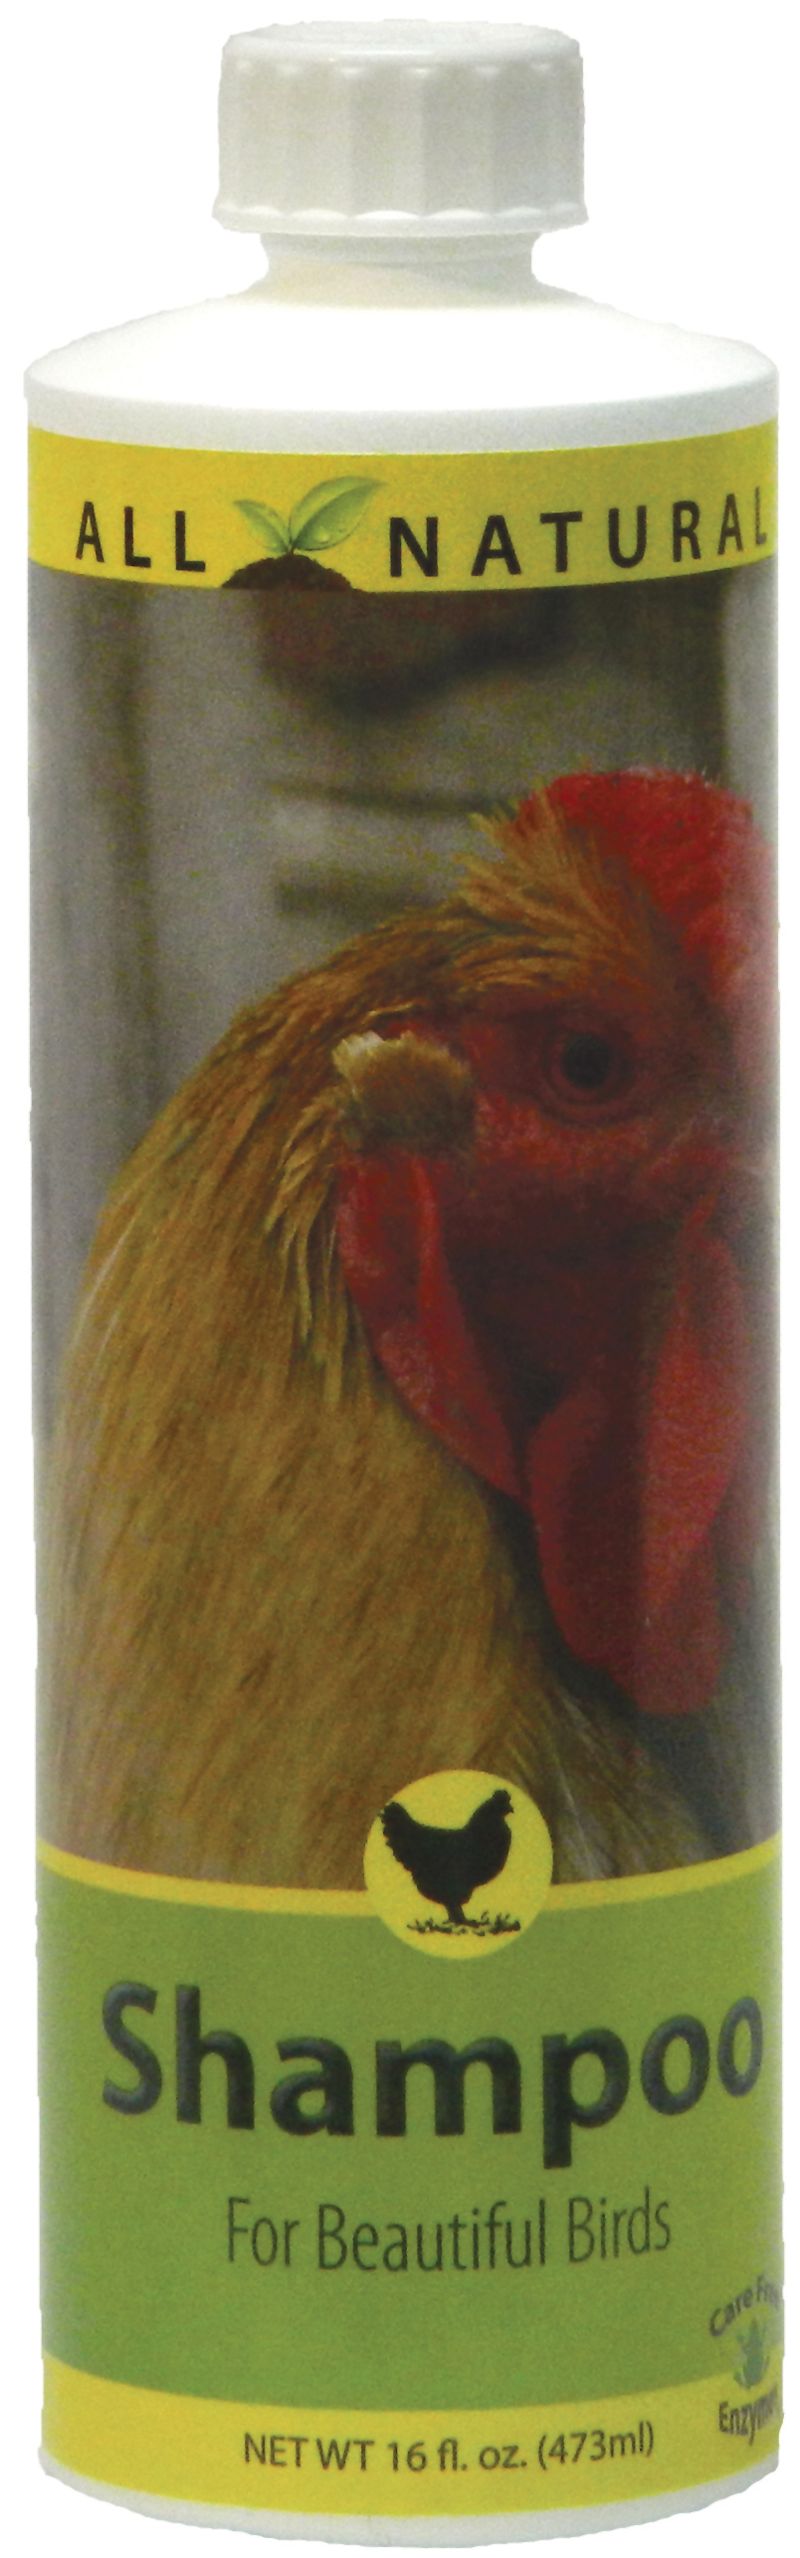 Poultry-Shampoo-16-oz